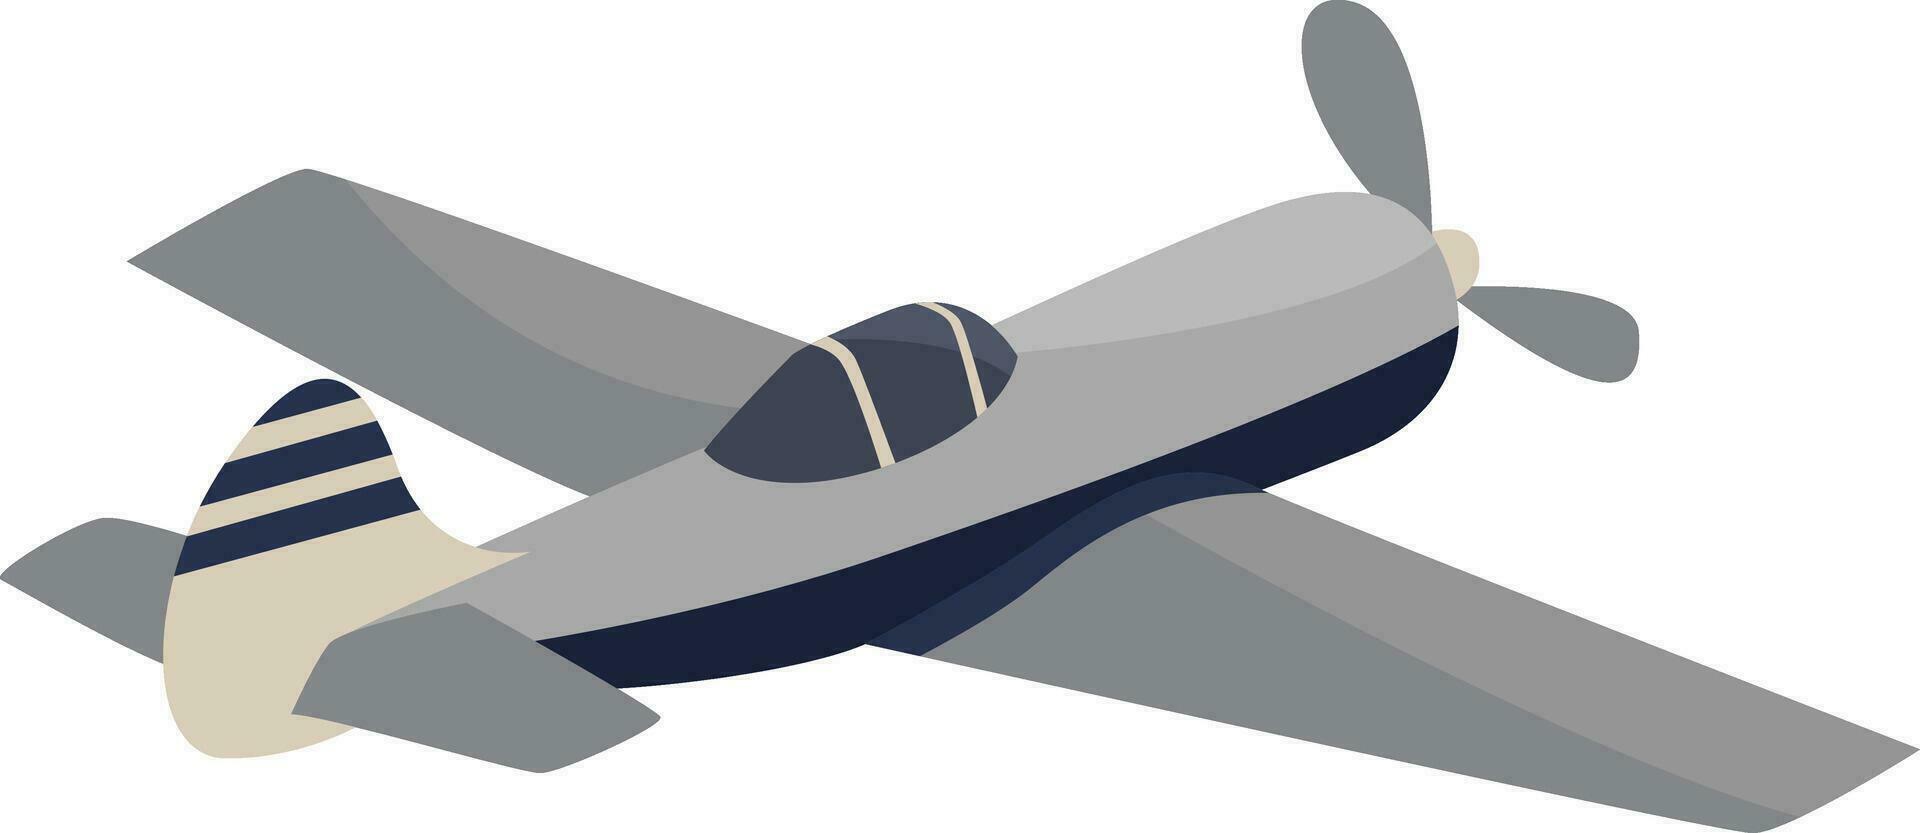 Monoplane flying, illustration, vector on white background